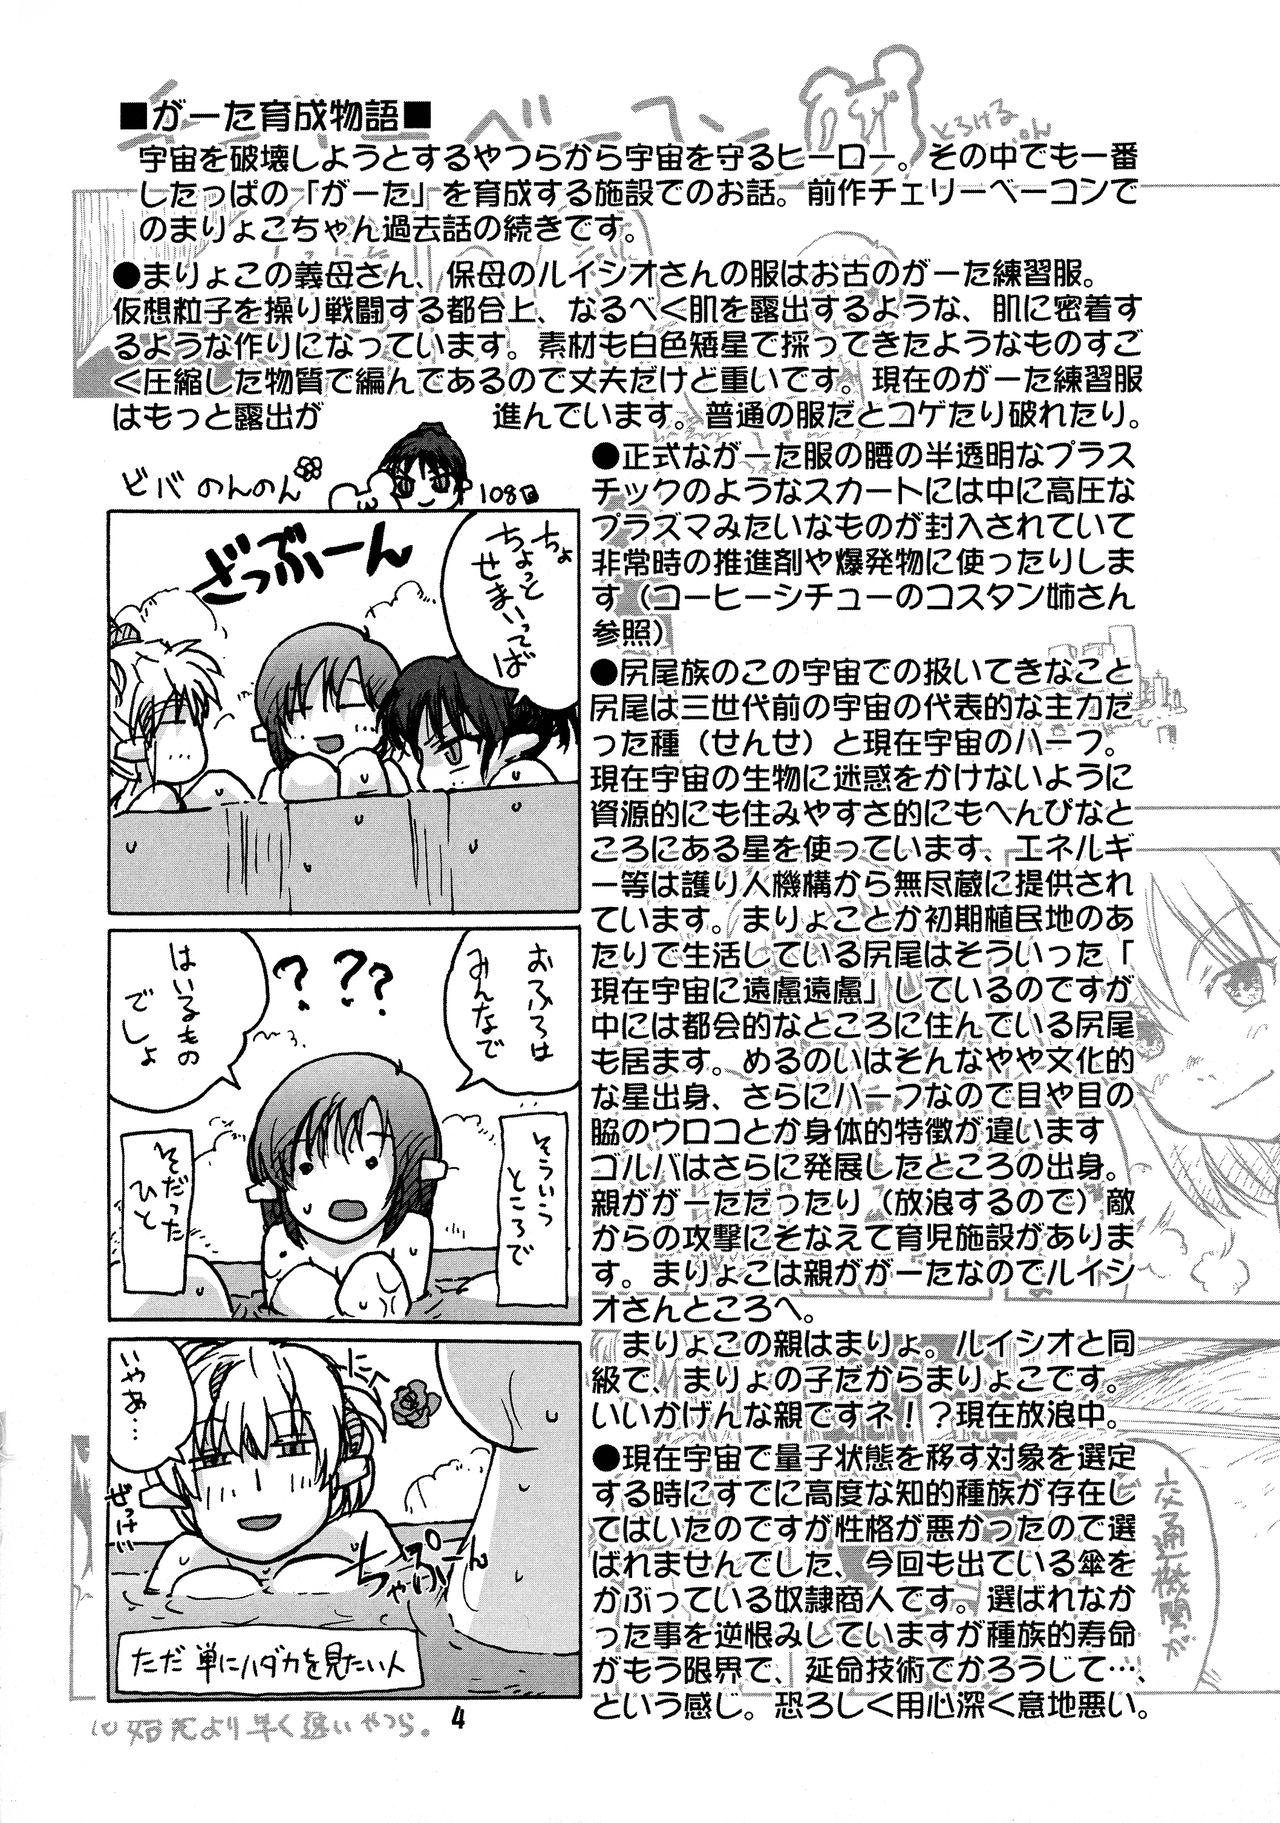 Manga Mintochikuwa vol. 3 3